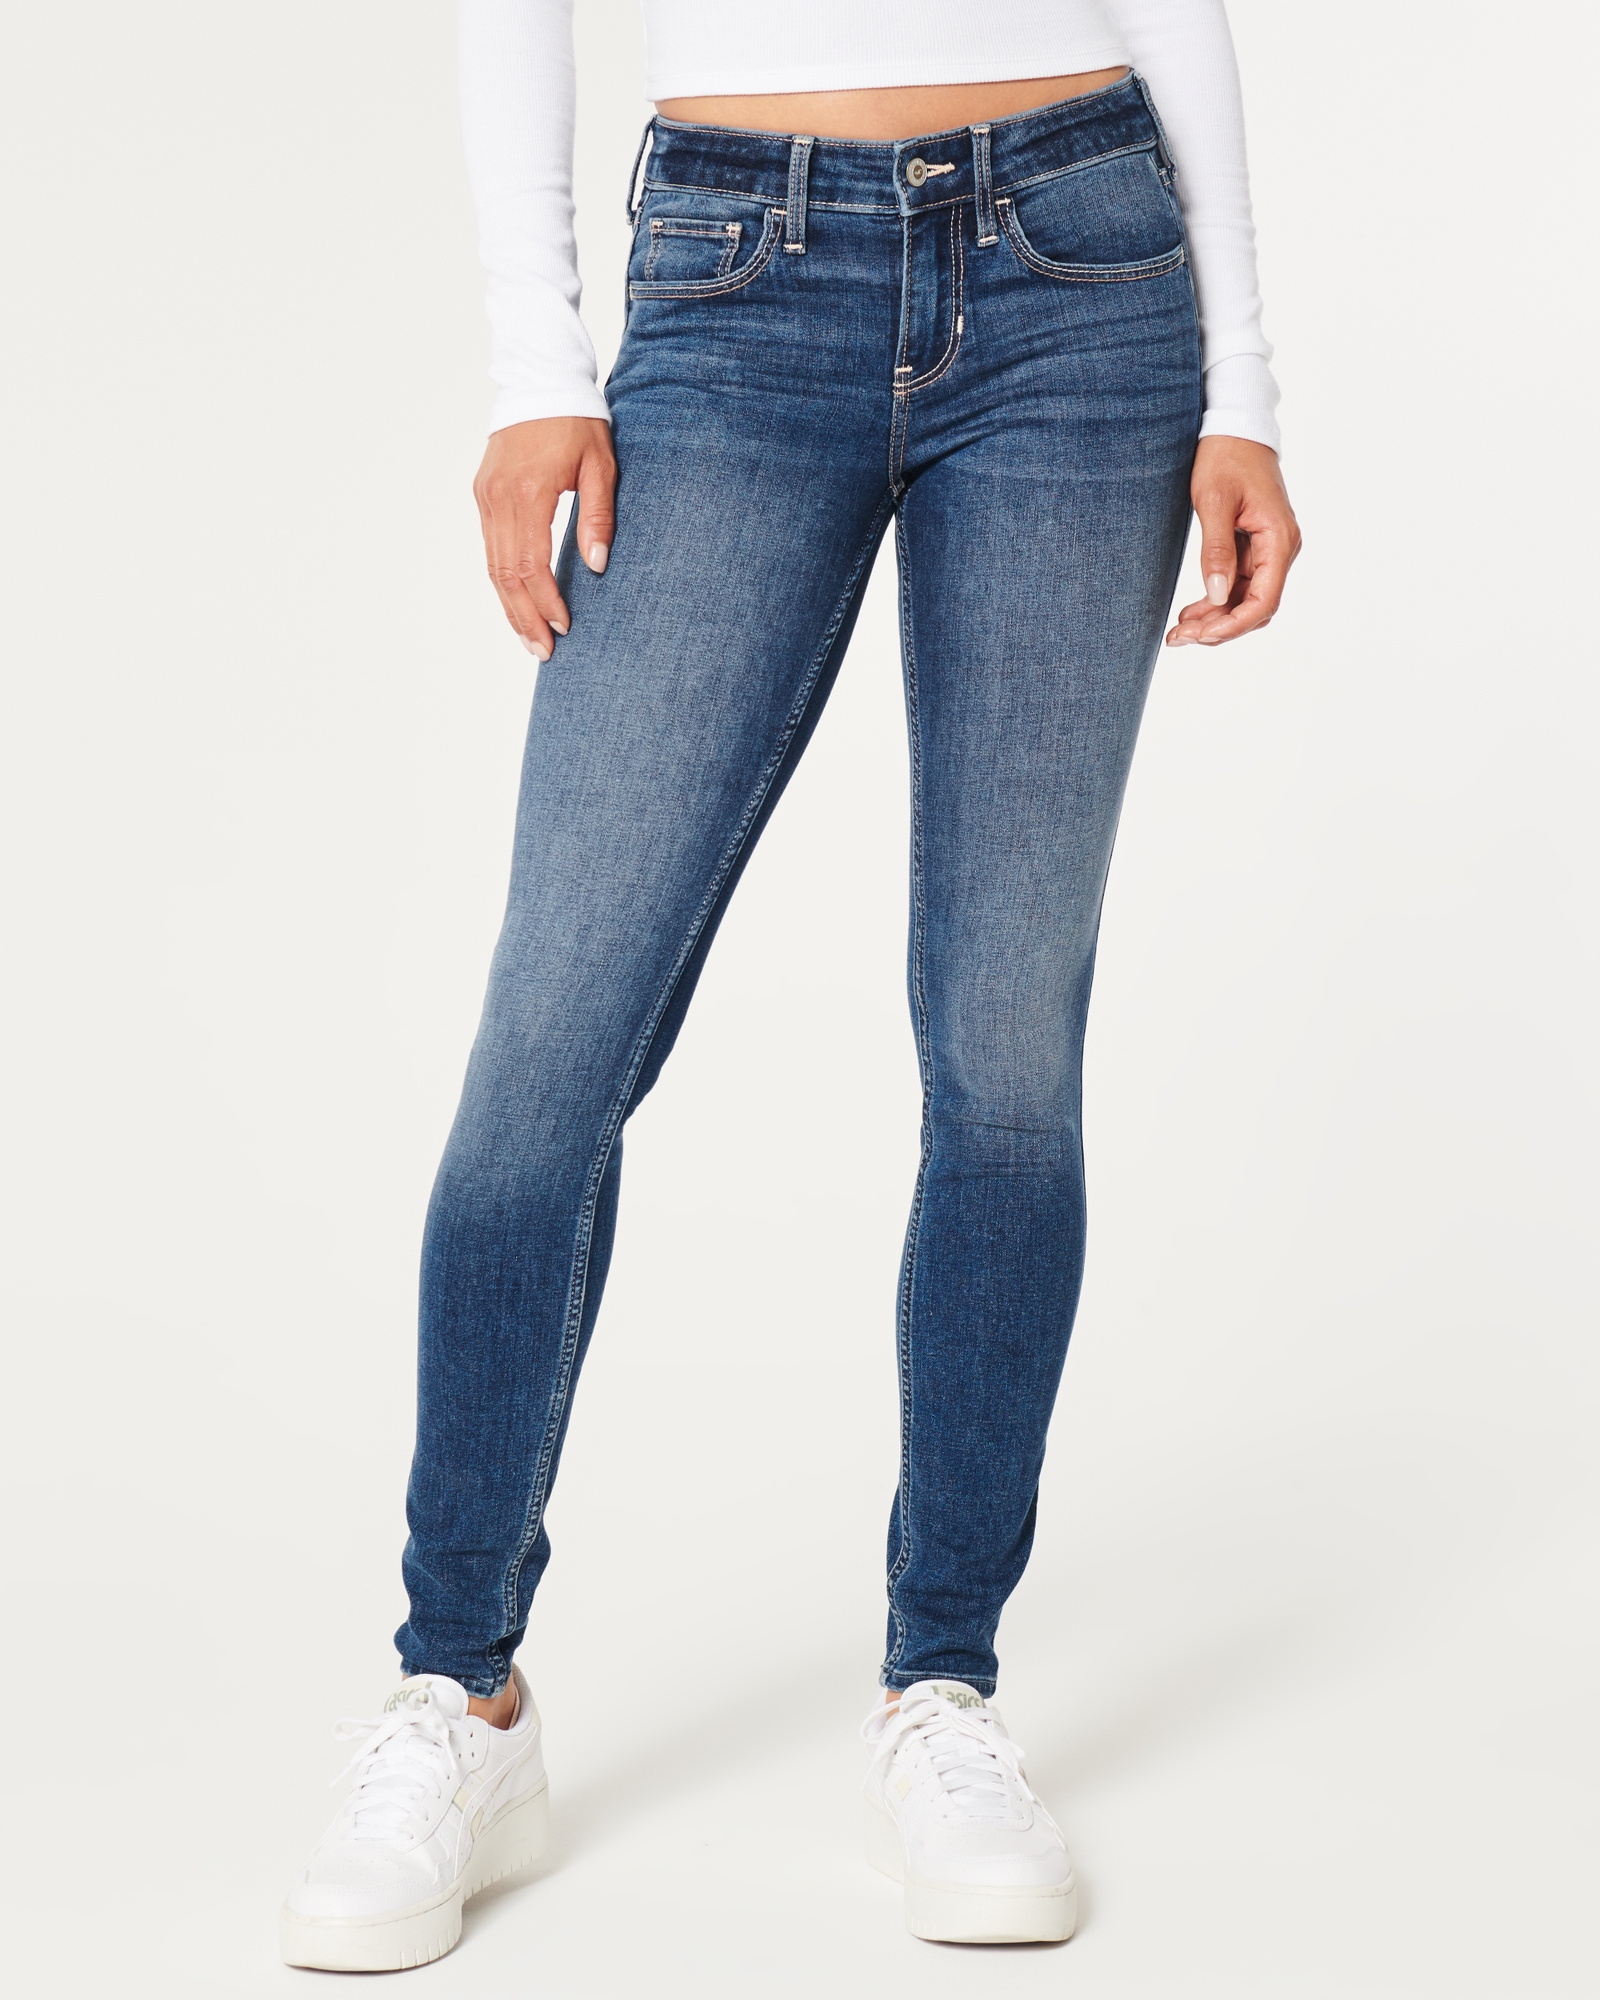 Hollister Jeans Womens 7R 7 Regular 28x31 Blue Skinny Dark Wash